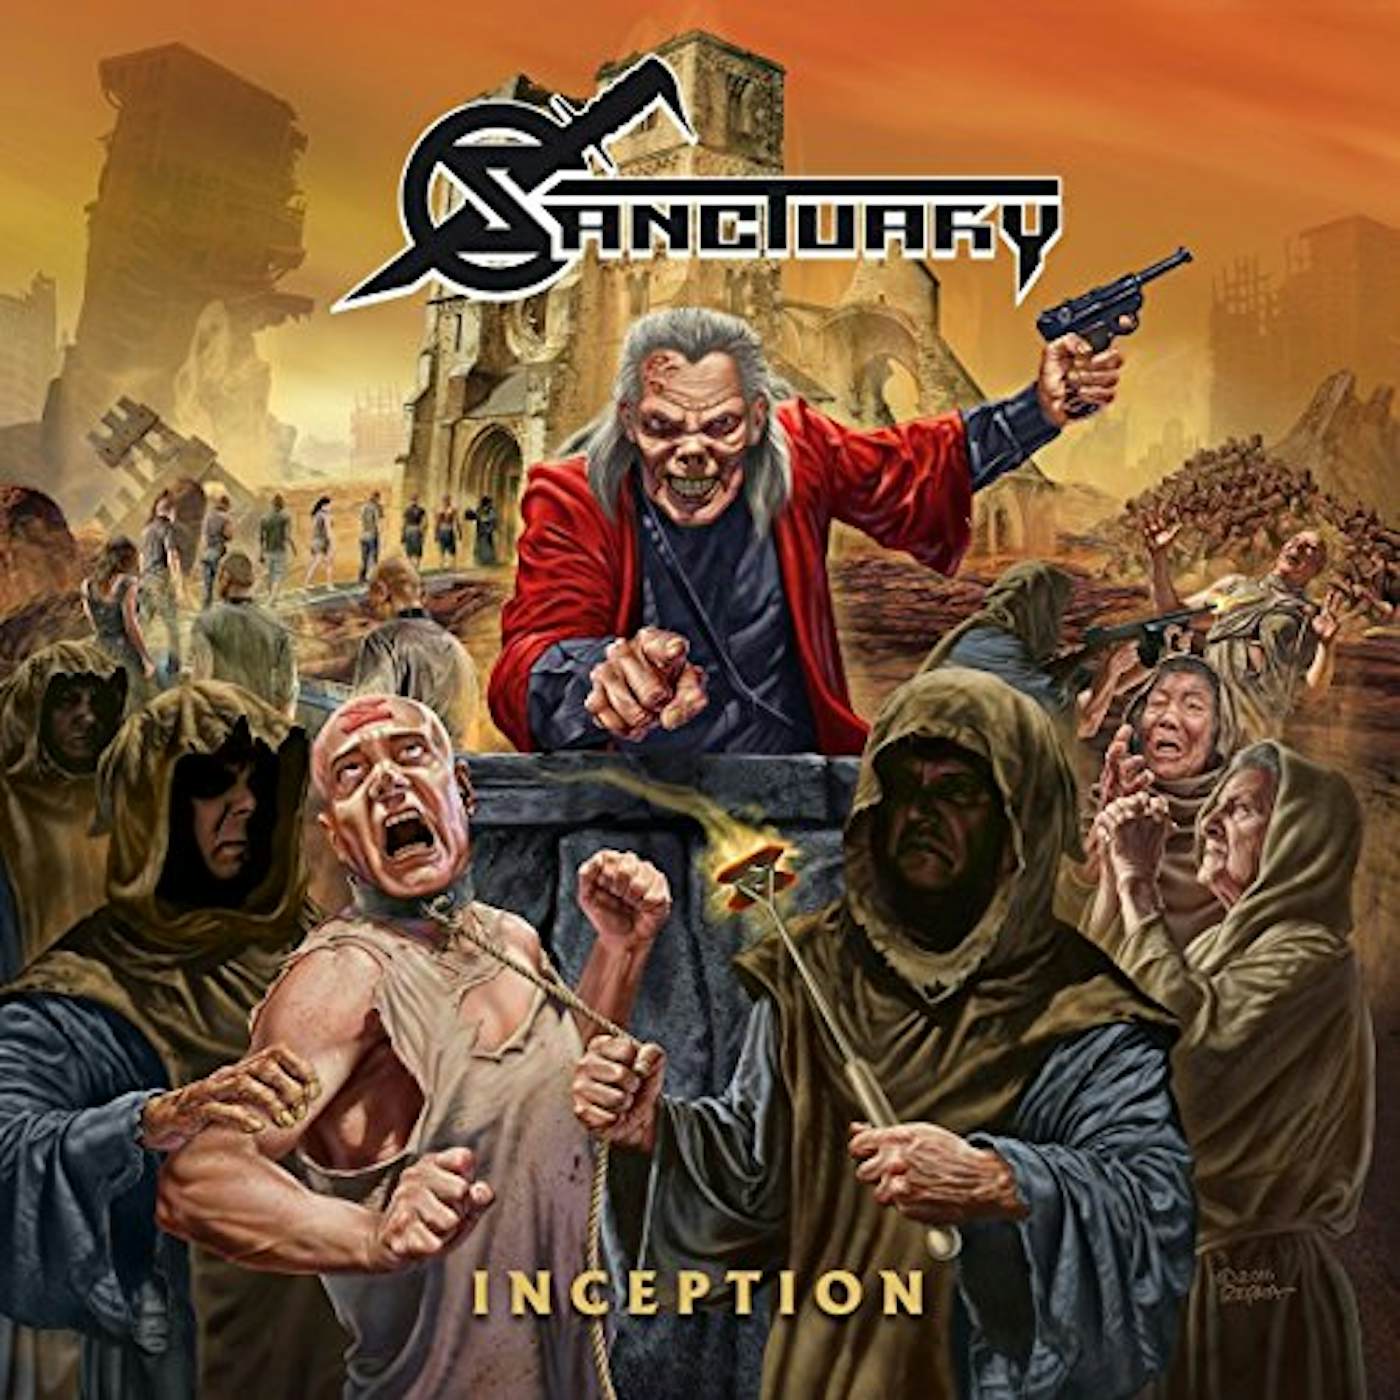 Sanctuary Inception Vinyl Record